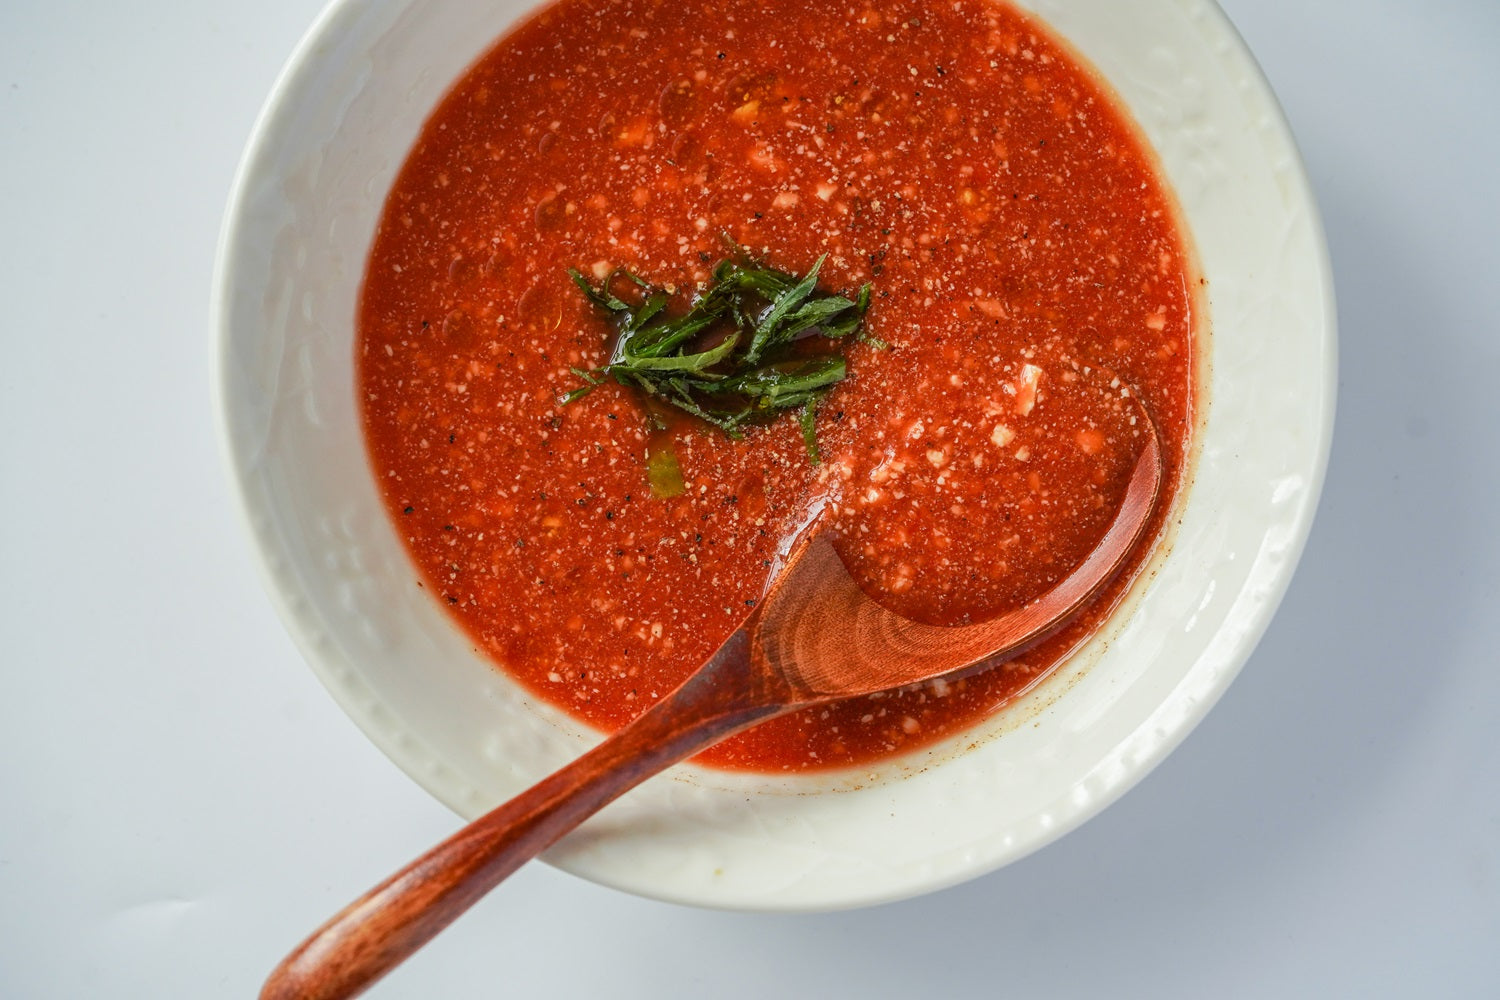 RECIPE: Simple Okara (Soybean Pulp) Gazpacho